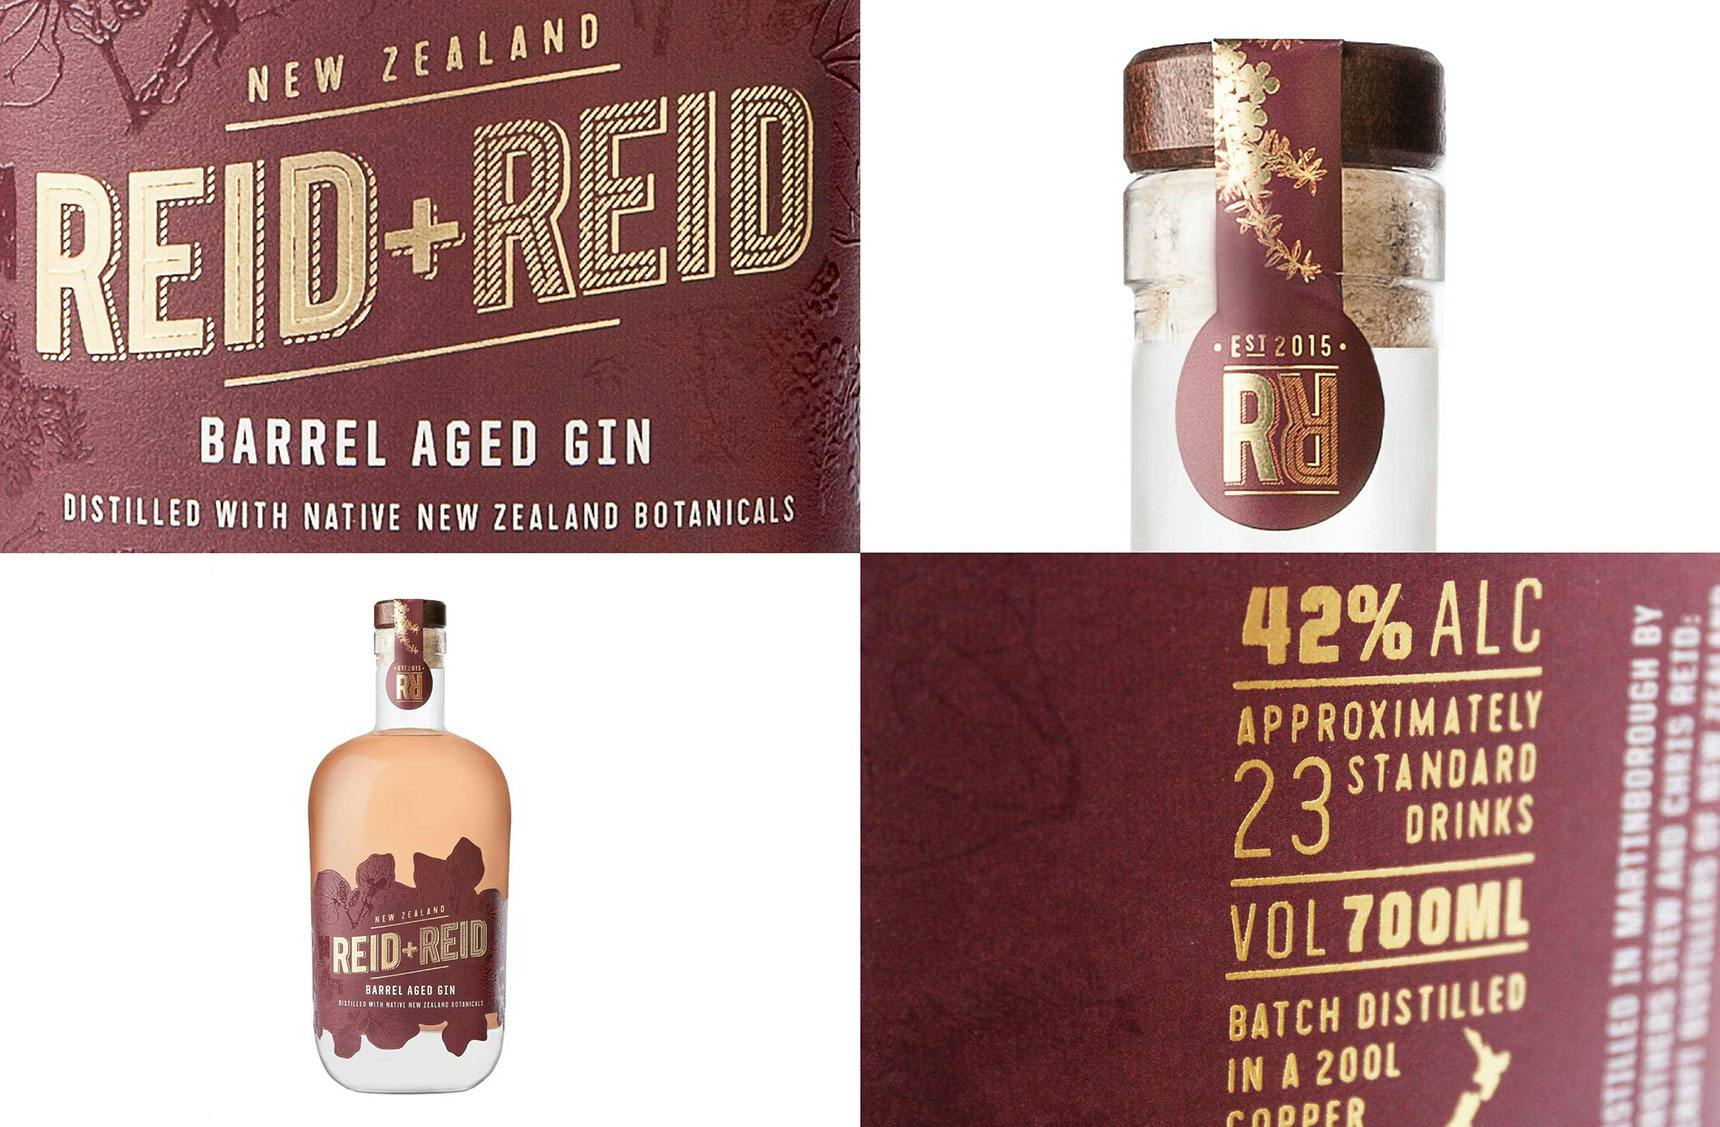 Reid And Reid Barrel Aged Gin Label Design